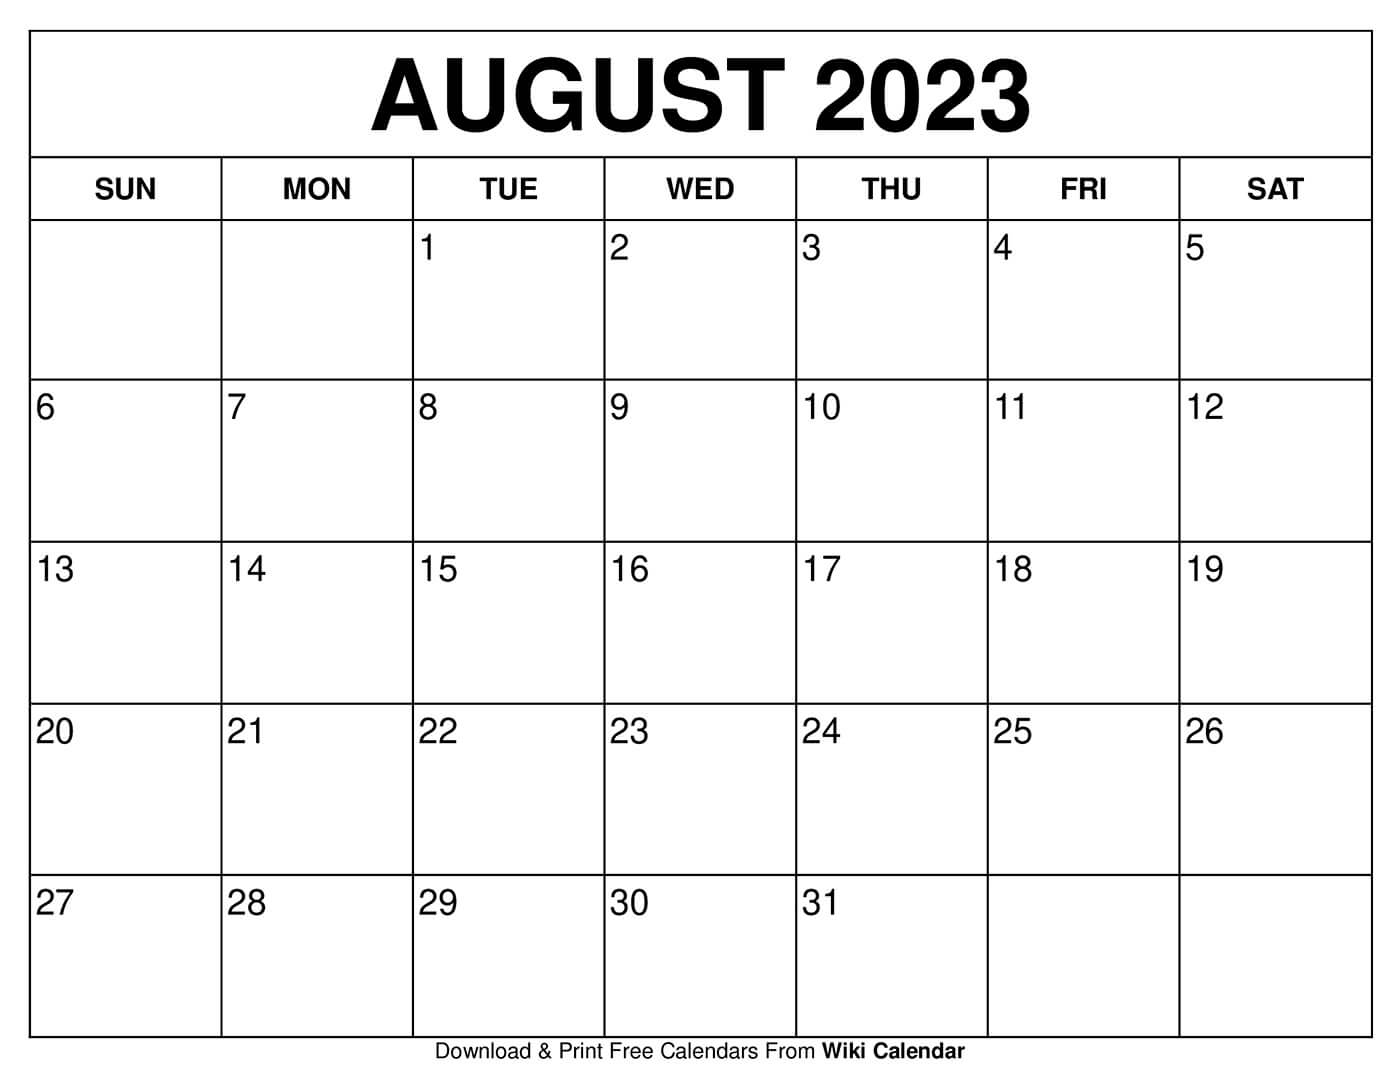 August 2023 Monthly Calendar Template - Riset